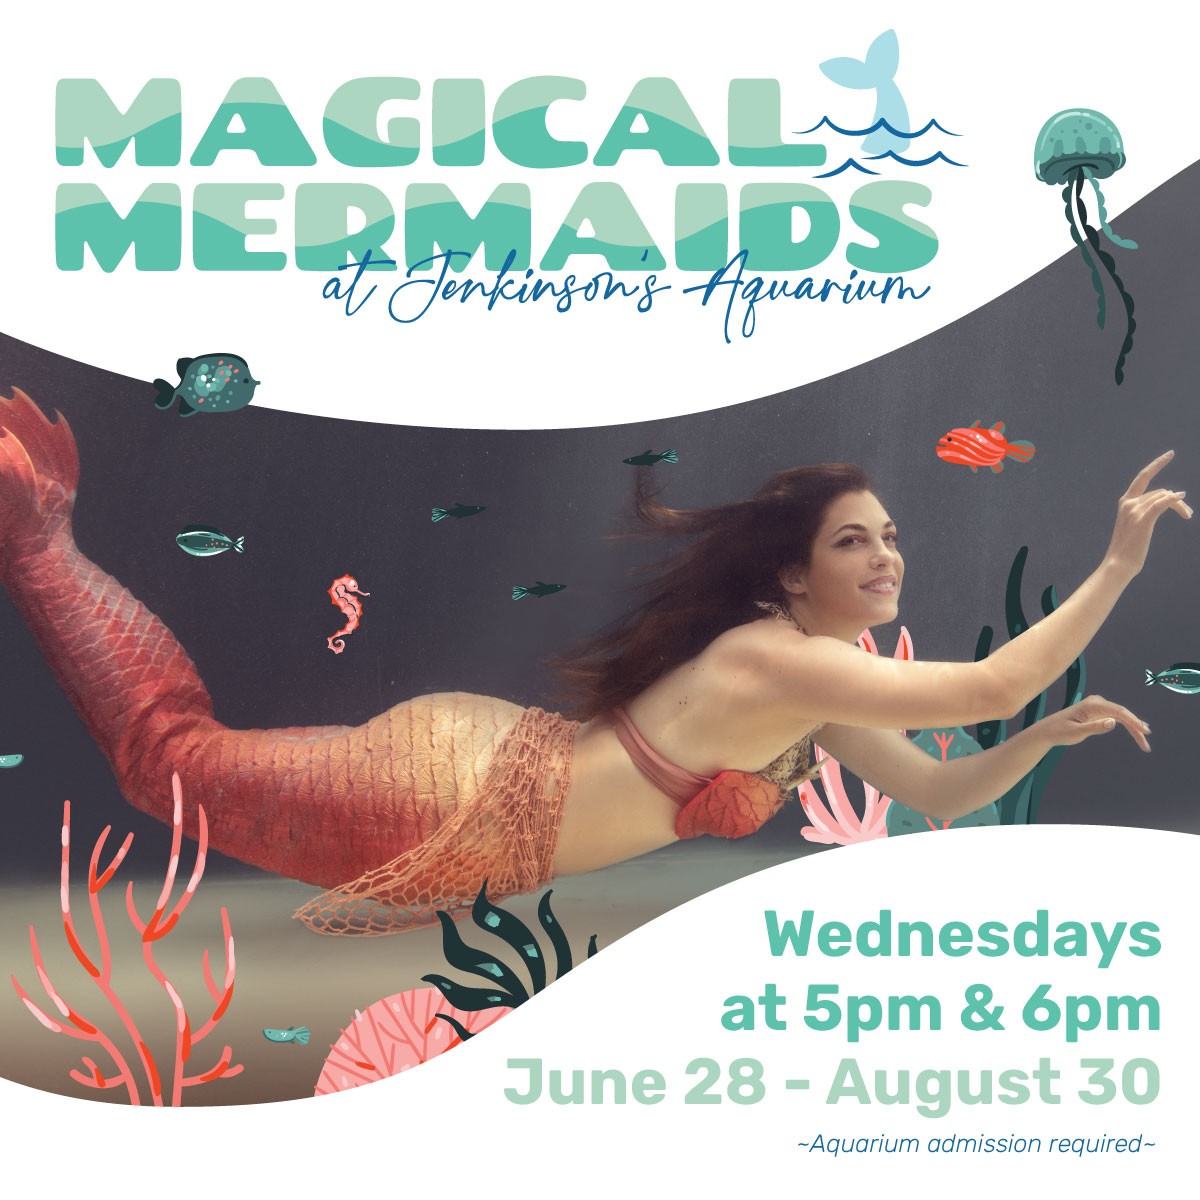 magical mermaids at jenkinsons aquarium every wednesday this summer